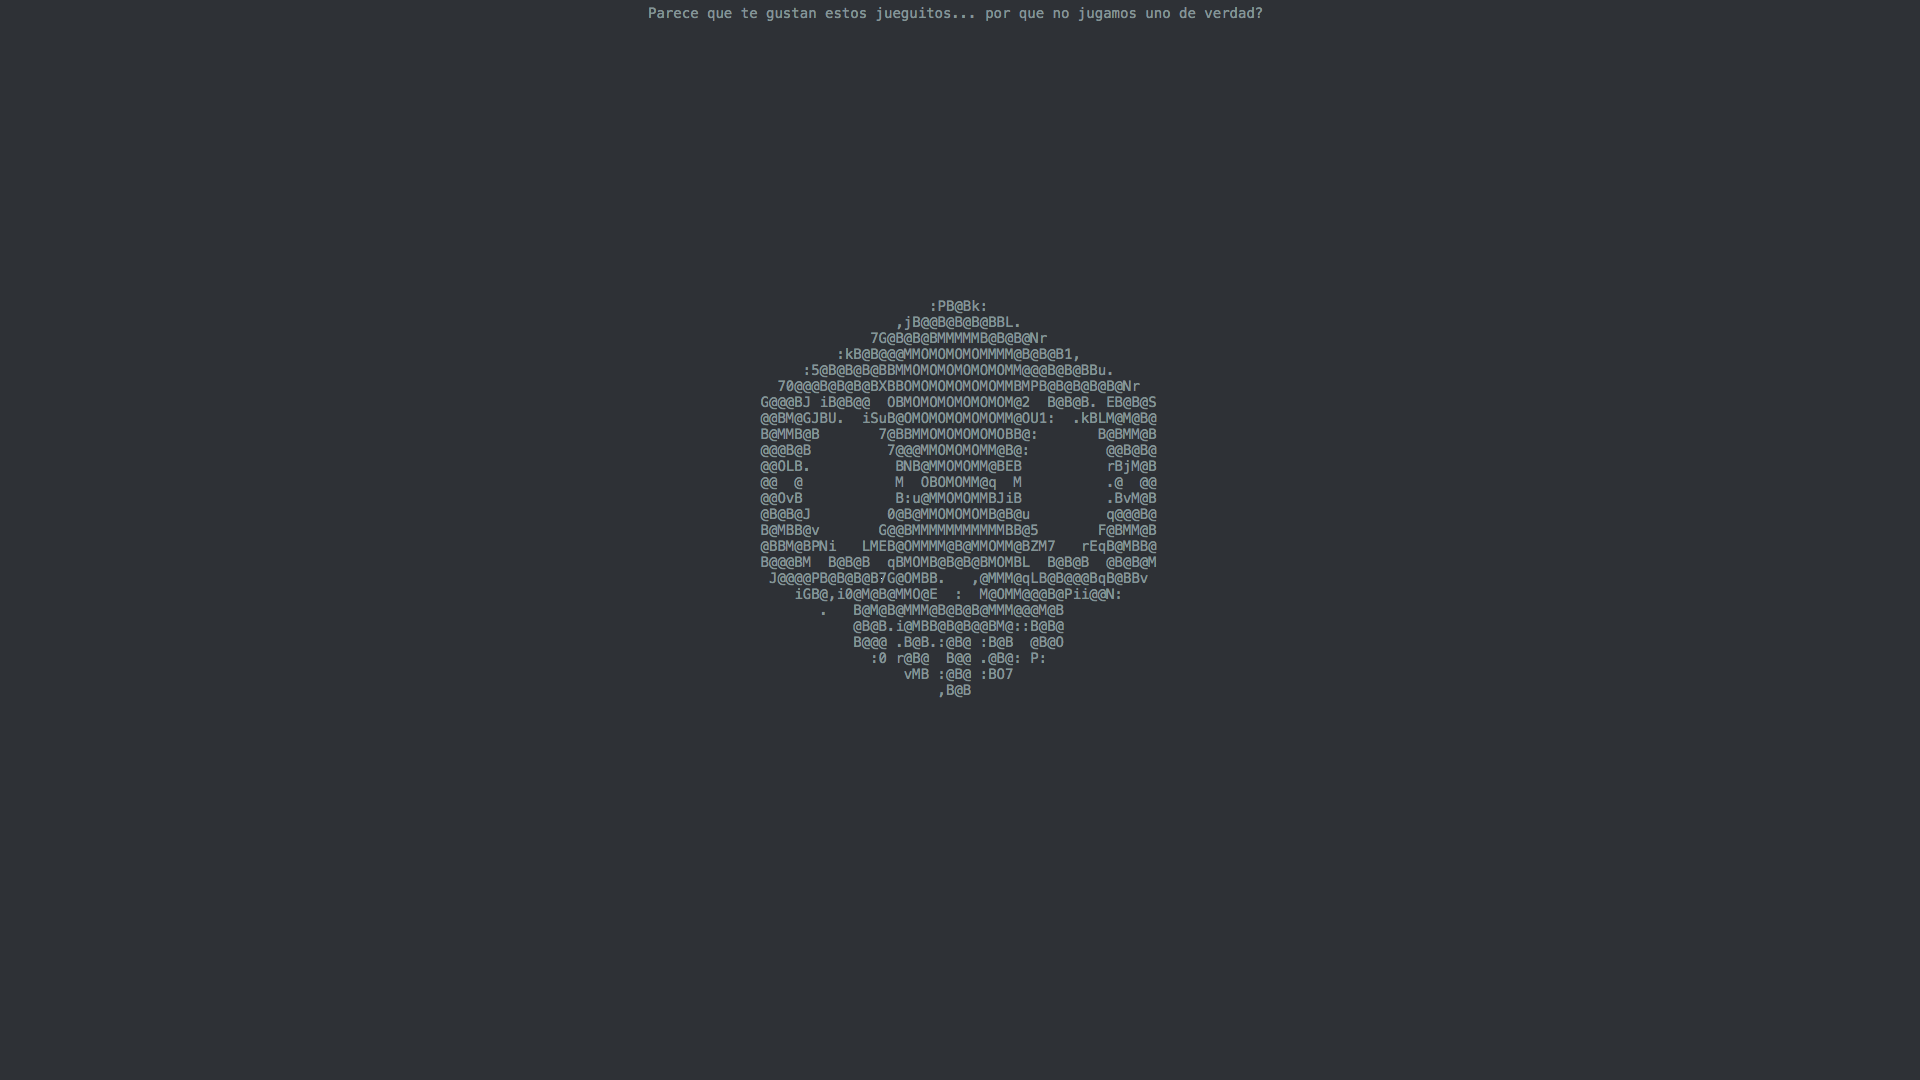 General 1920x1080 Overwatch Sombra (Overwatch) minimalism PC gaming simple background text digital art